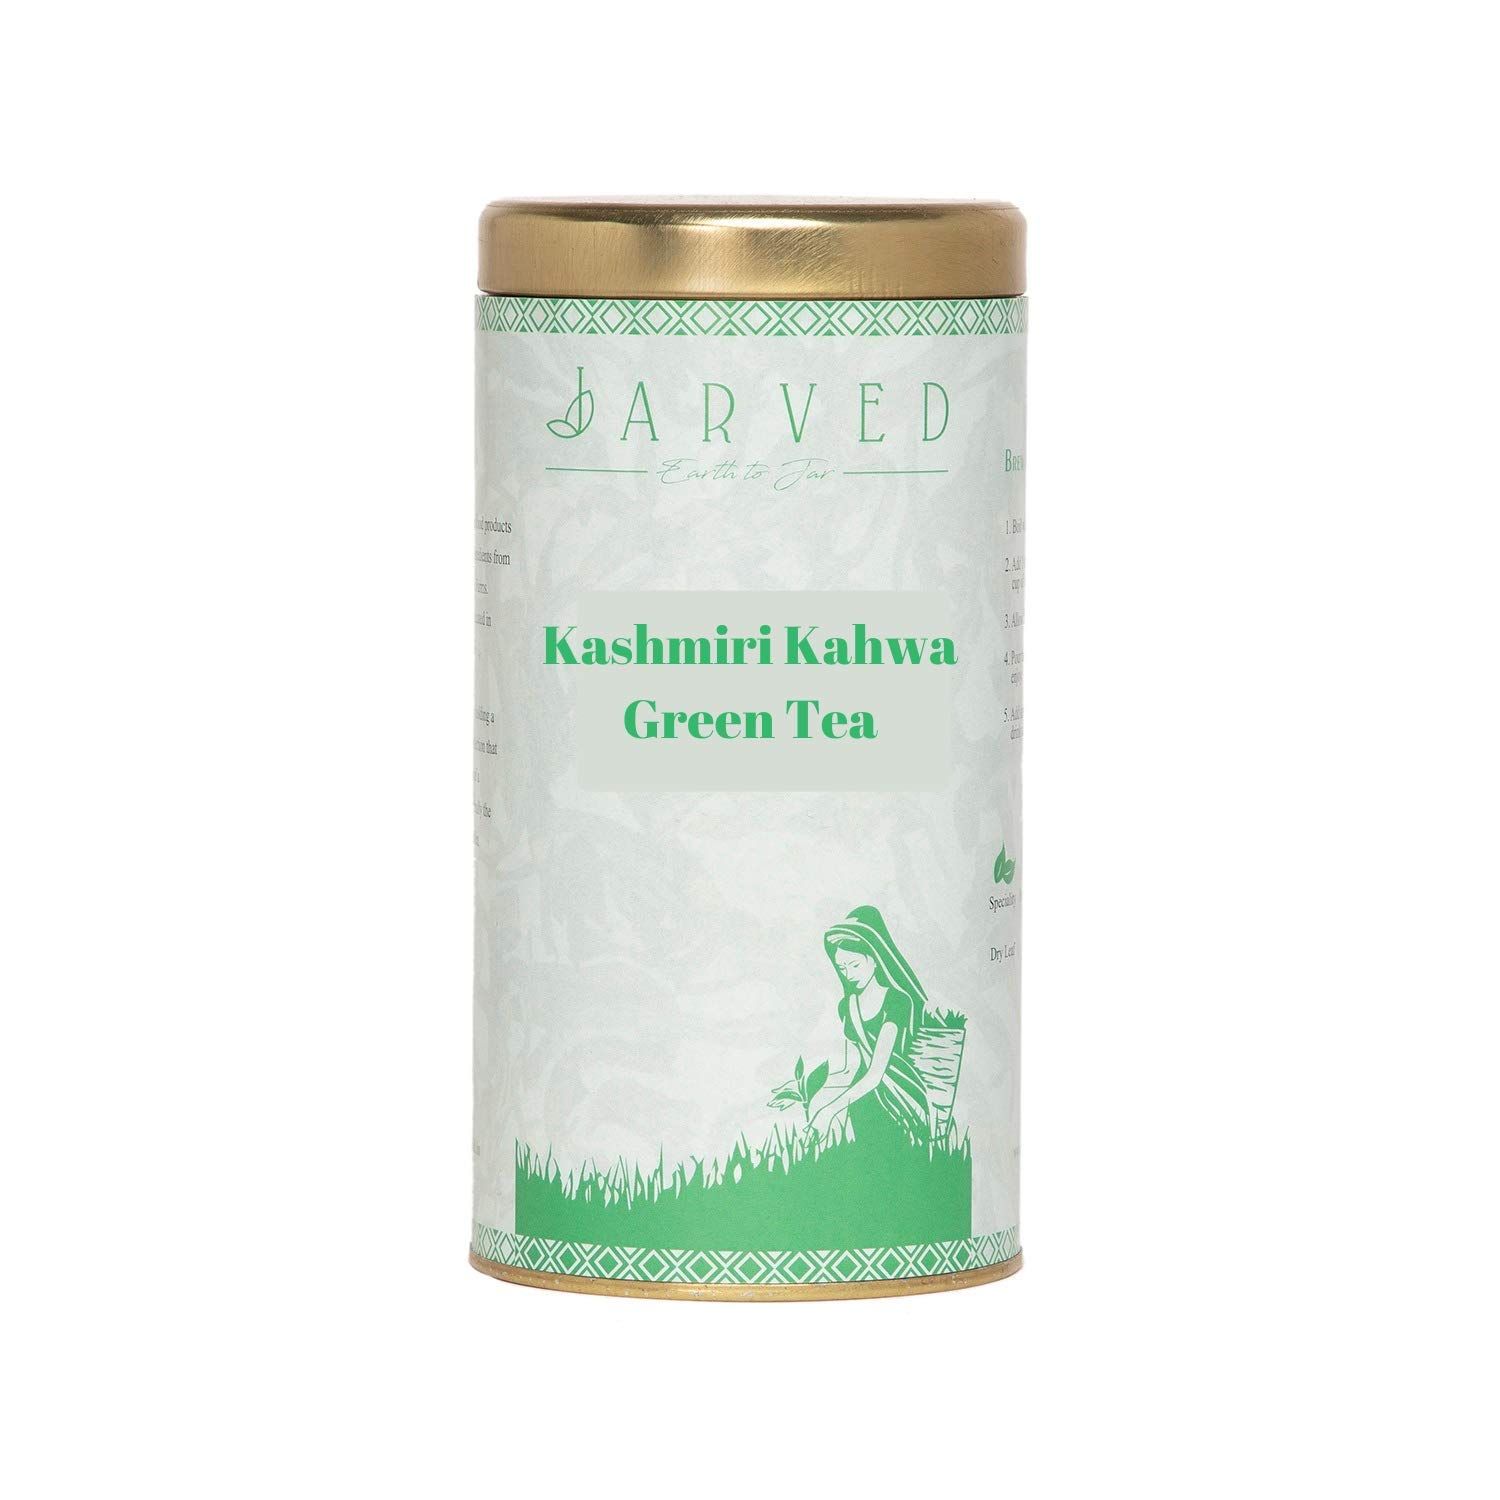 Jarved Kasmiri Kahwa Green Tea Image